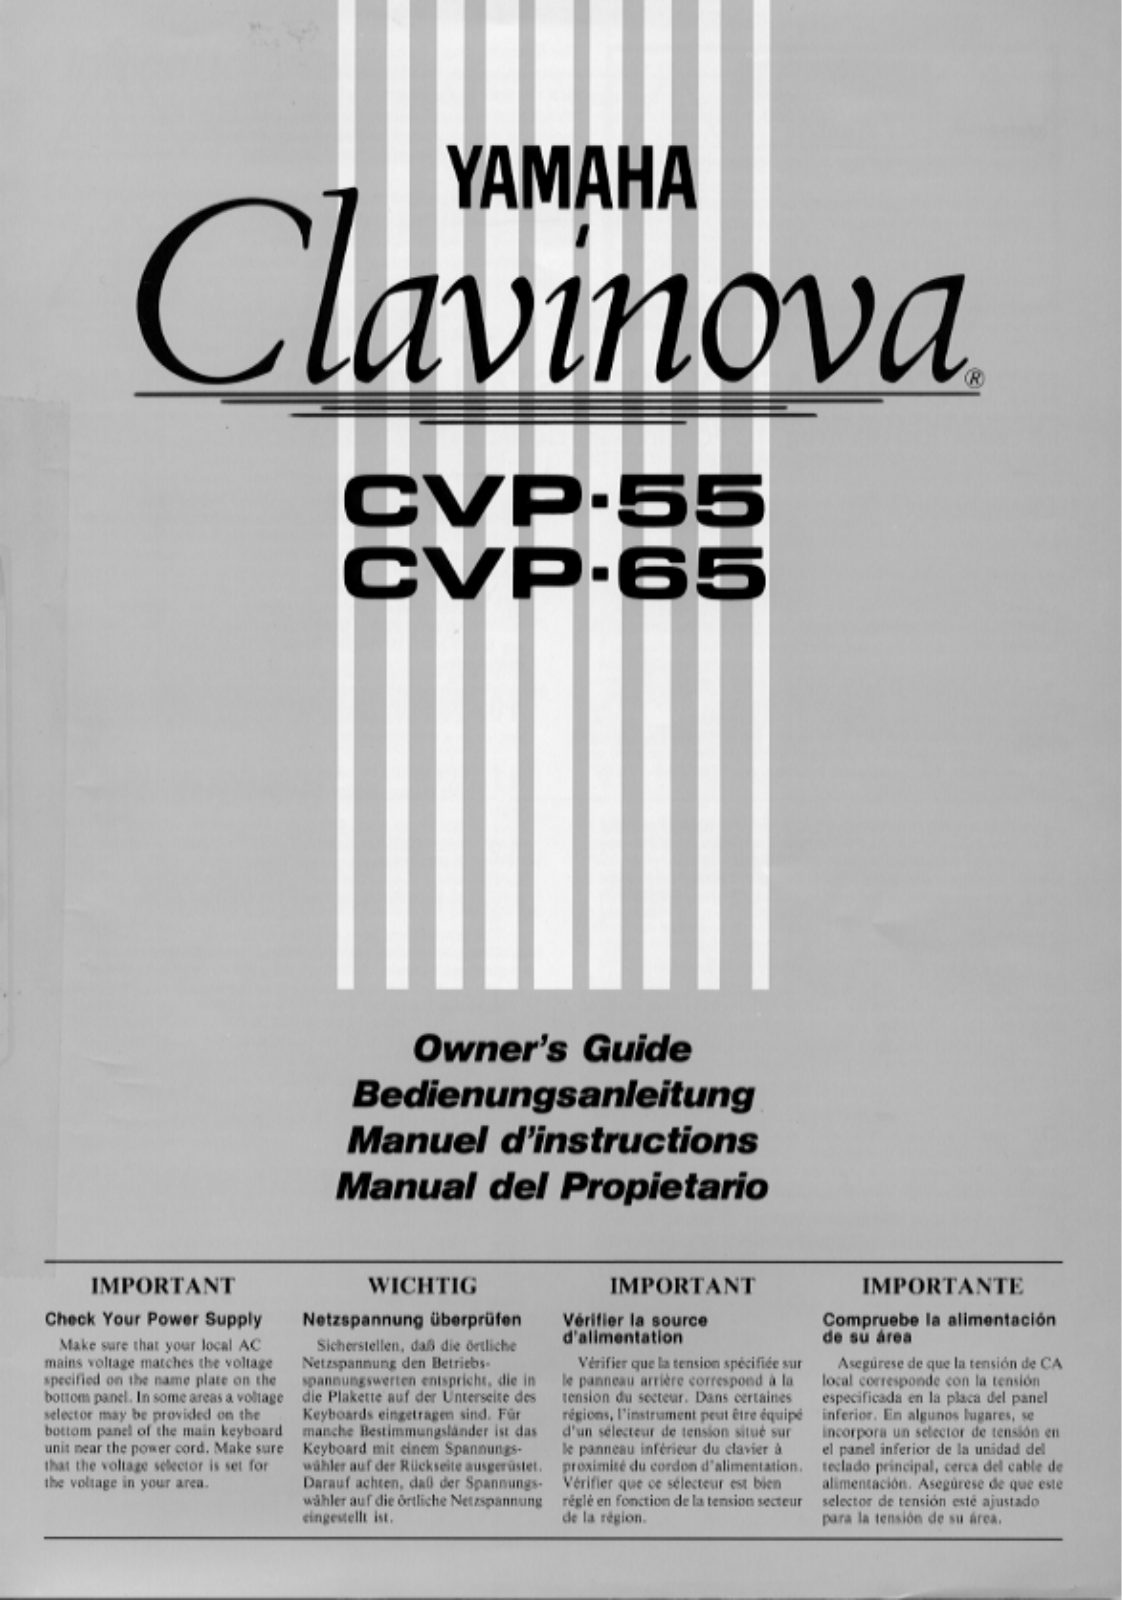 Yamaha CVP-55, CVP-65 Owner's Manual